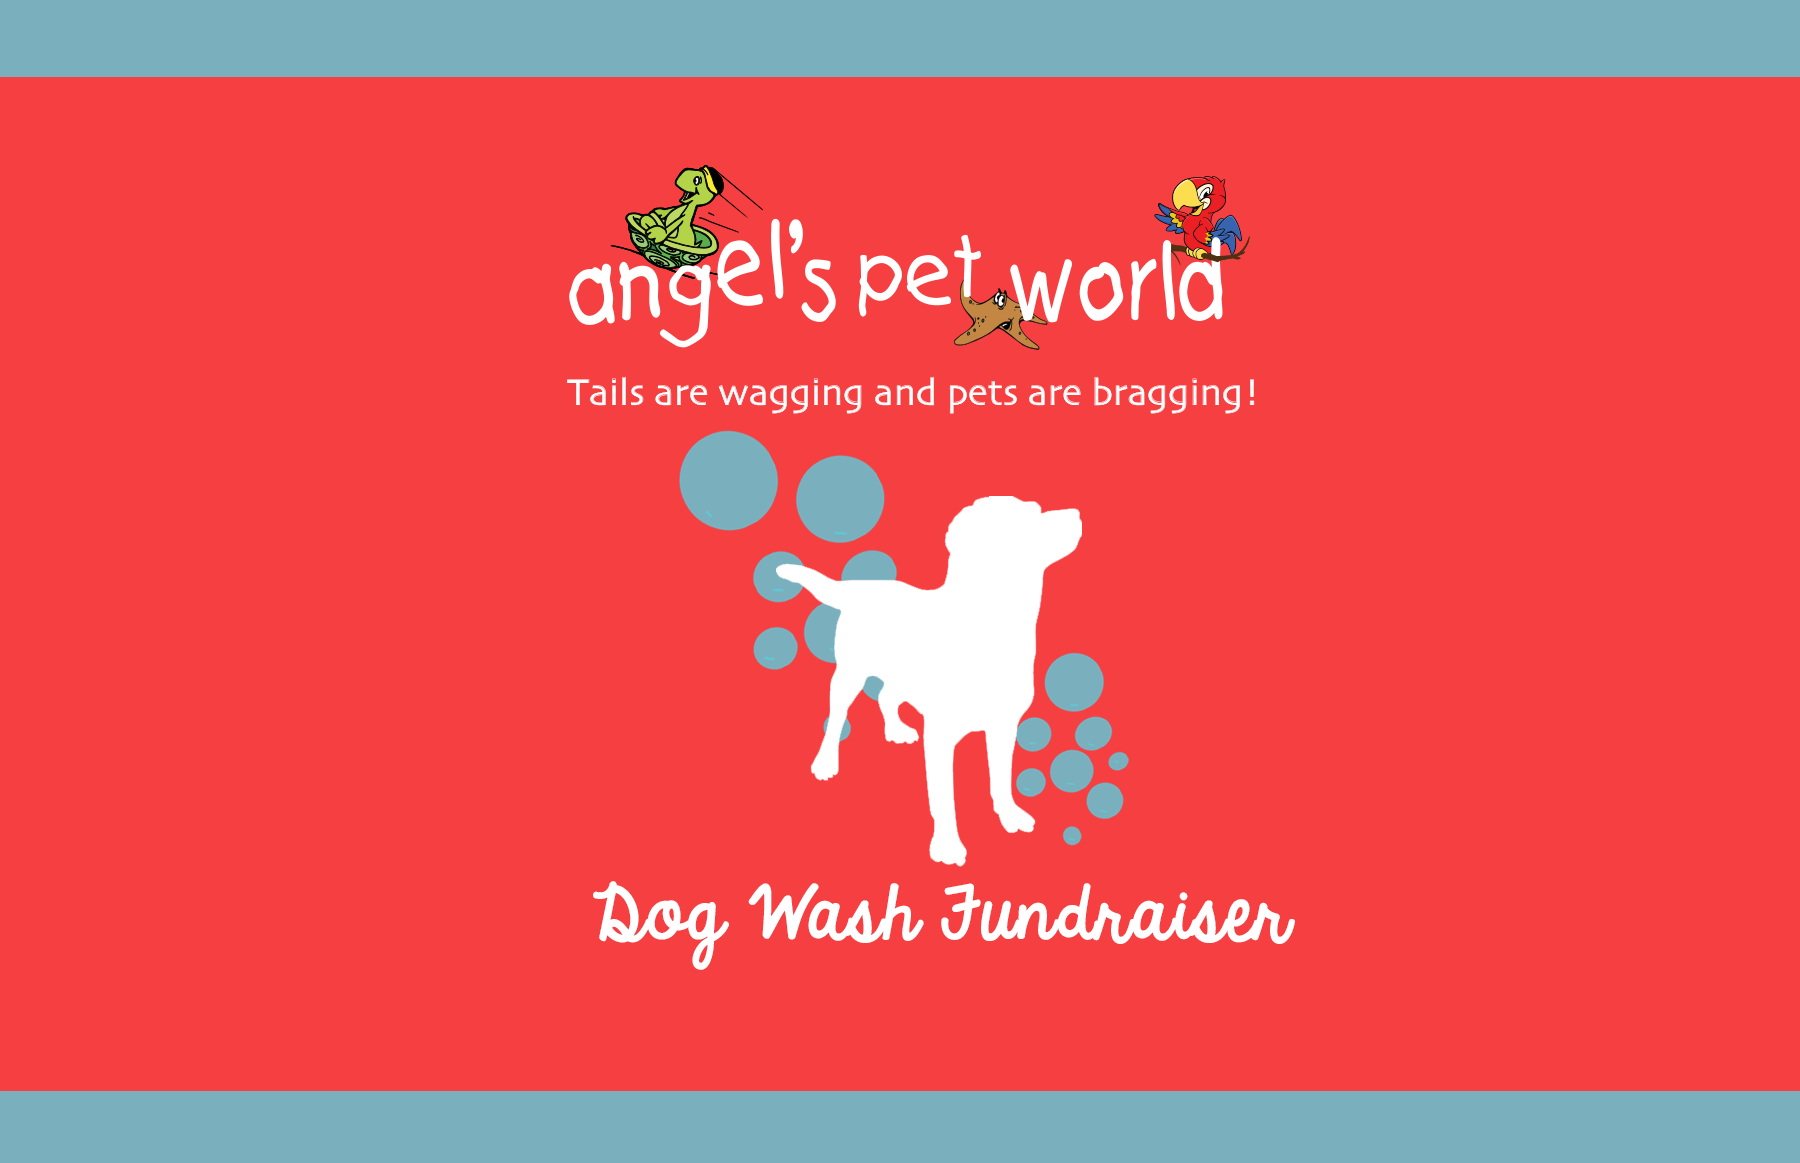 dog-wash-fundraiser-price-match-angels-pet-world-pet-supply-hudson-angels-pet-world